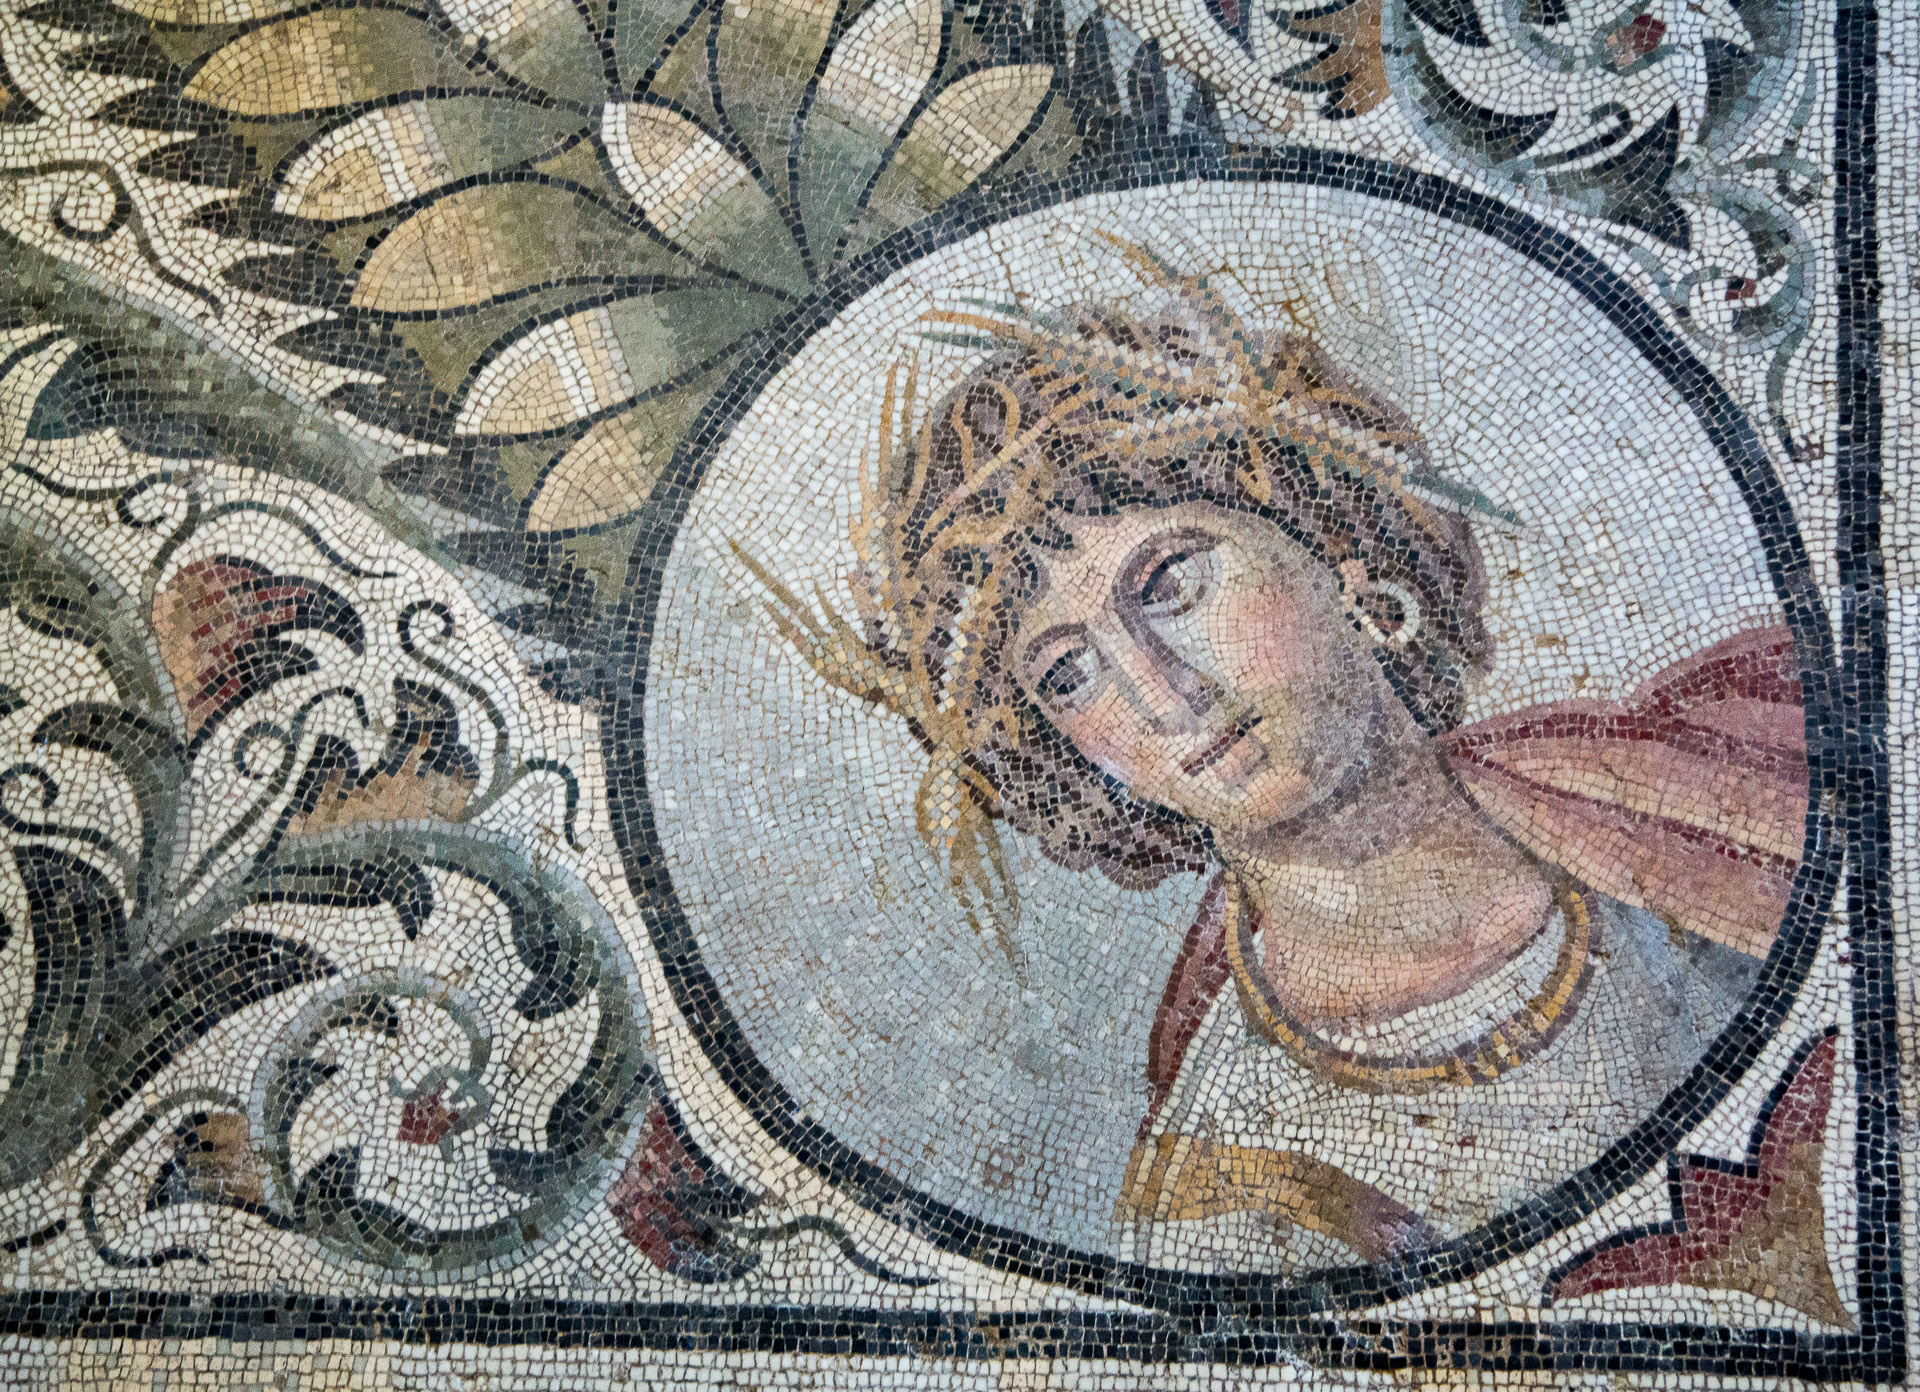 Roman Mosaics at the British Museum in London